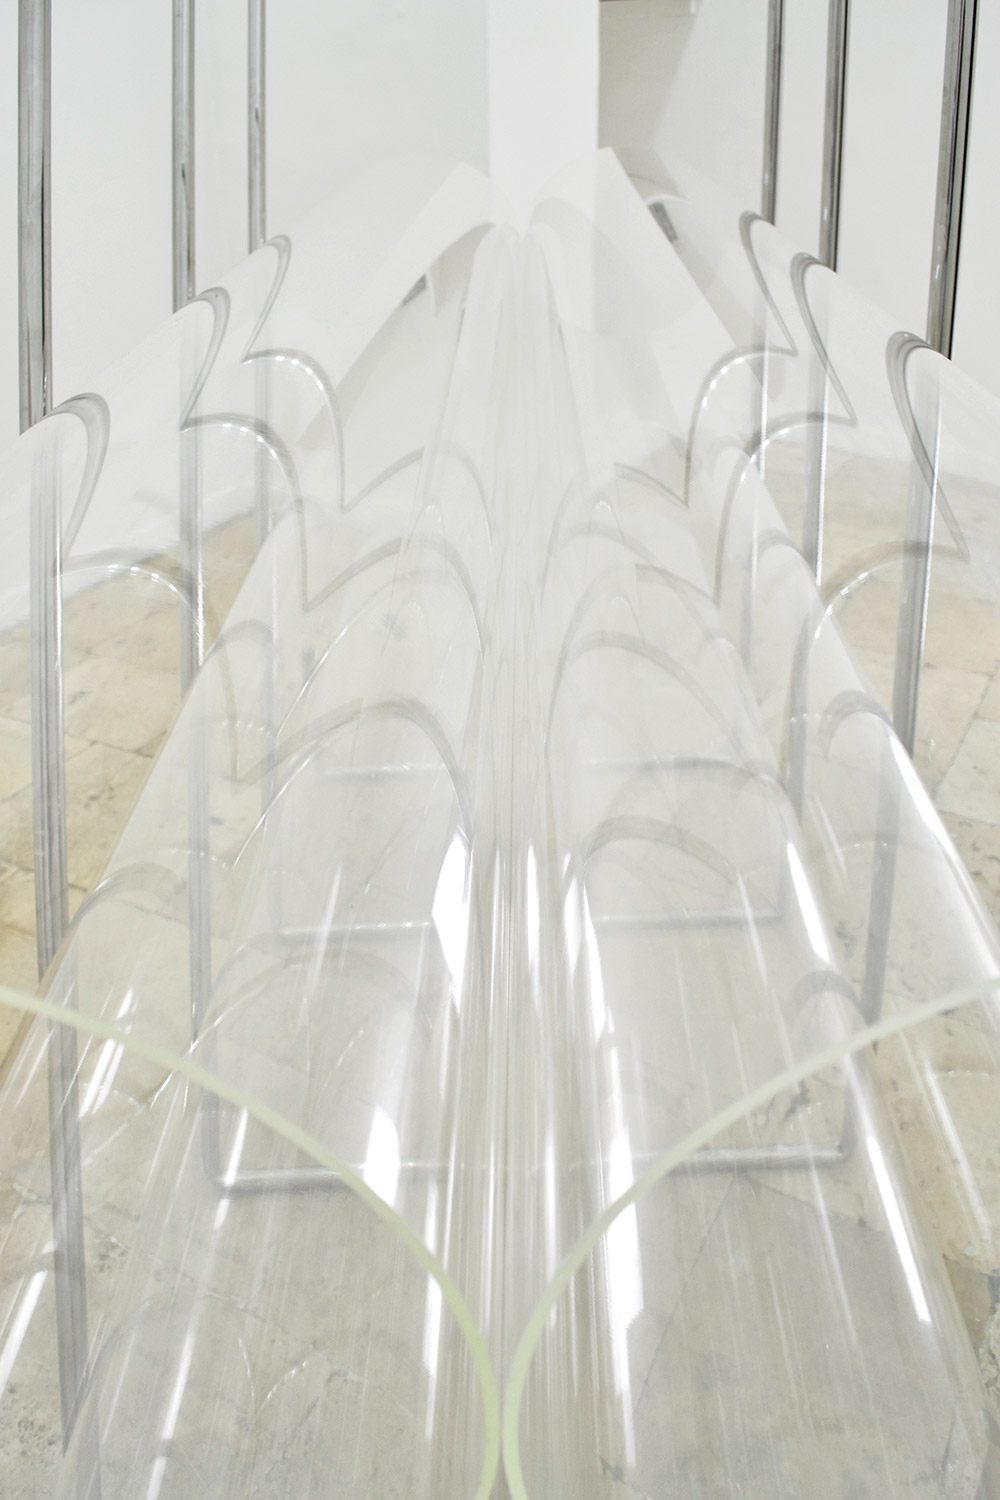 Antonio Trotta, Paquete especial, 1966-2016, steel, plexiglass, 330x145x110 cm (detail)